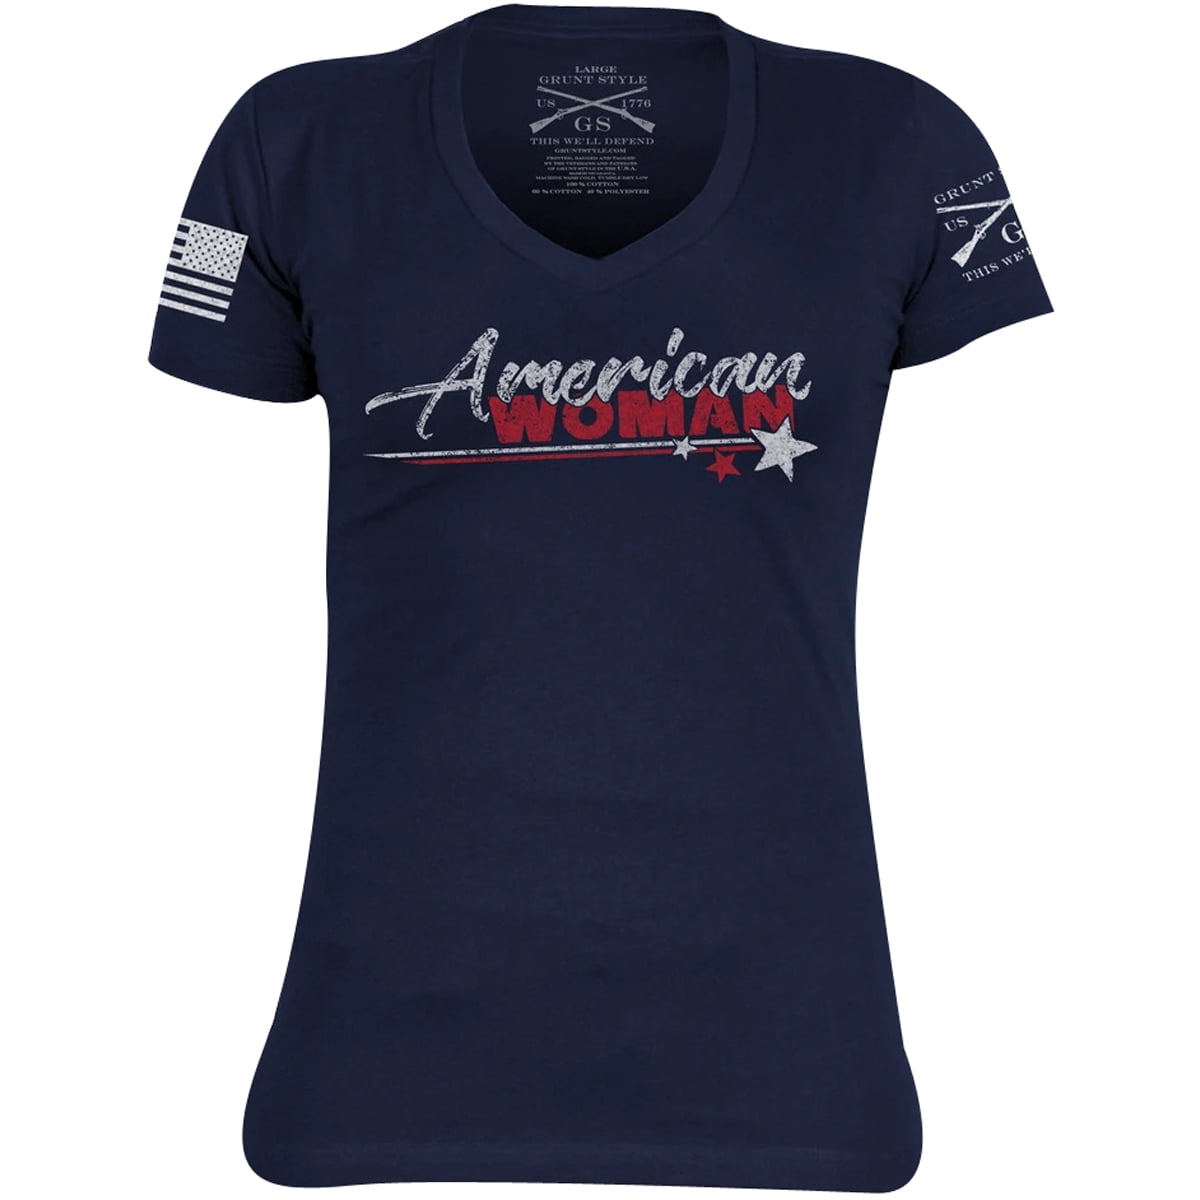 Grunt Style Women's American Woman V-Neck T-Shirt - 2XL - Midnight